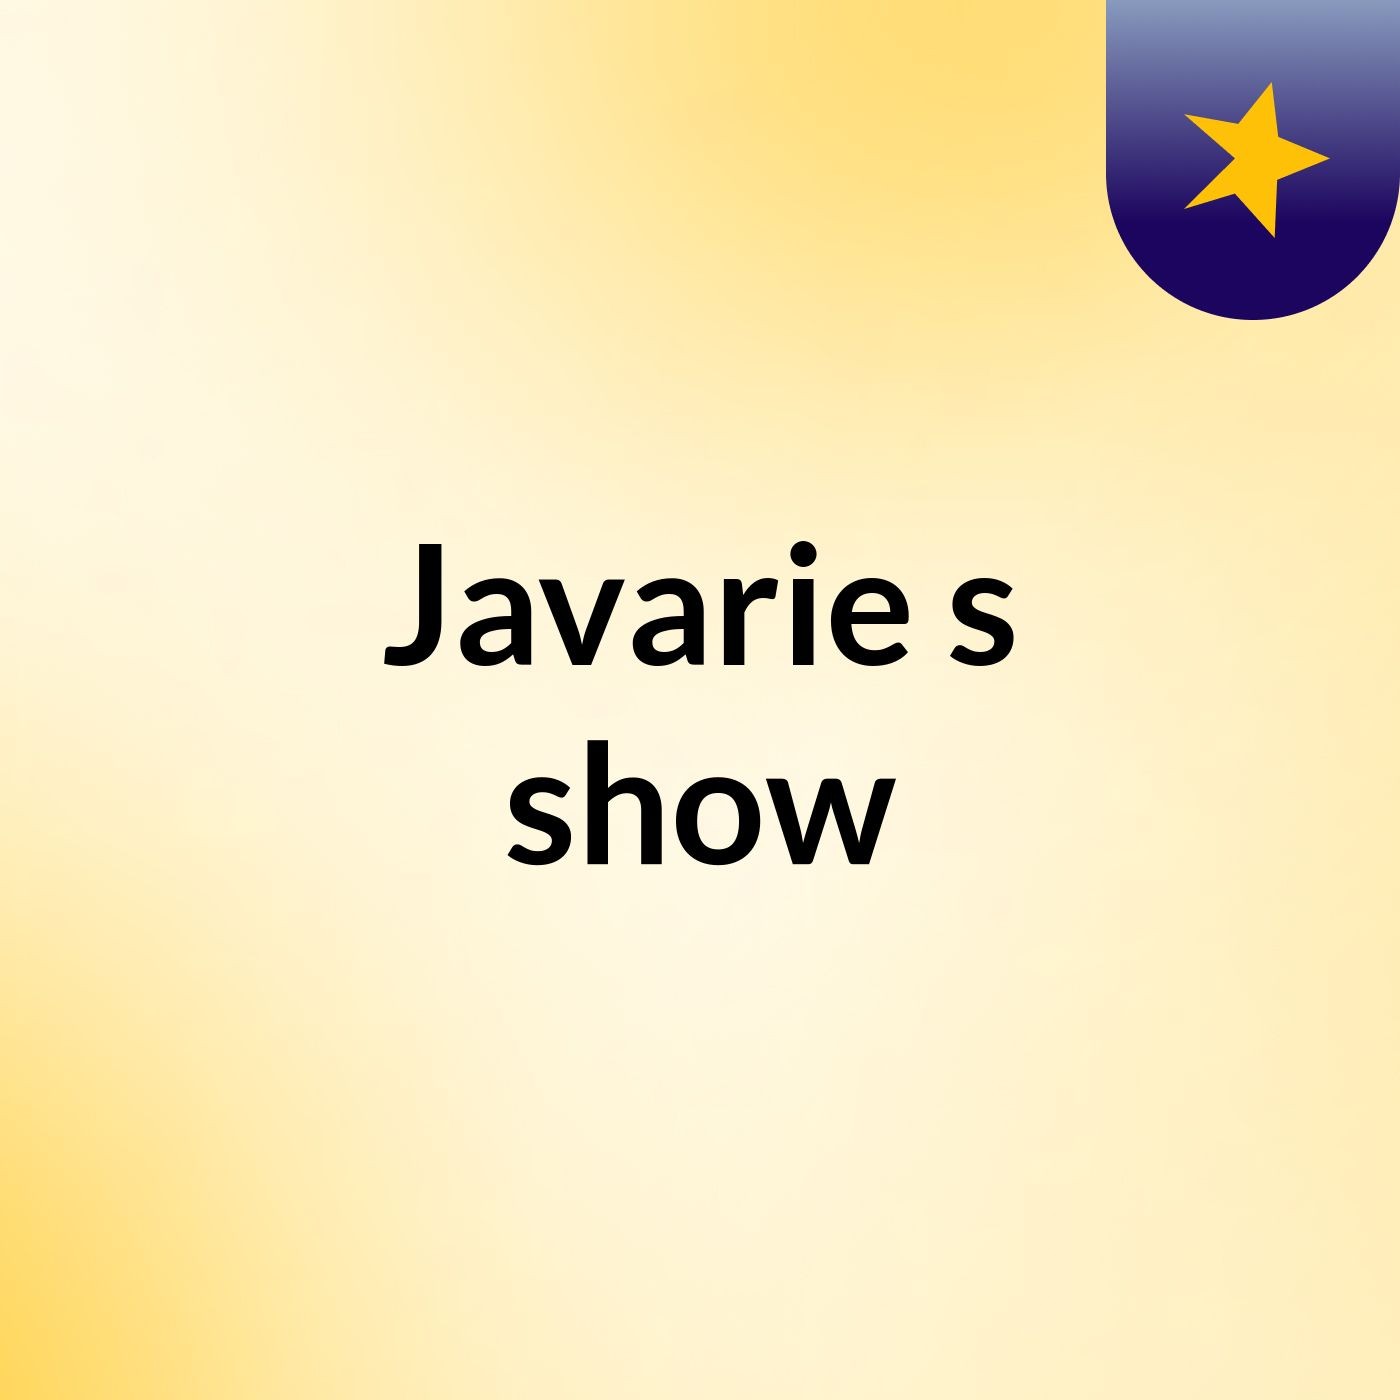 Javarie's show